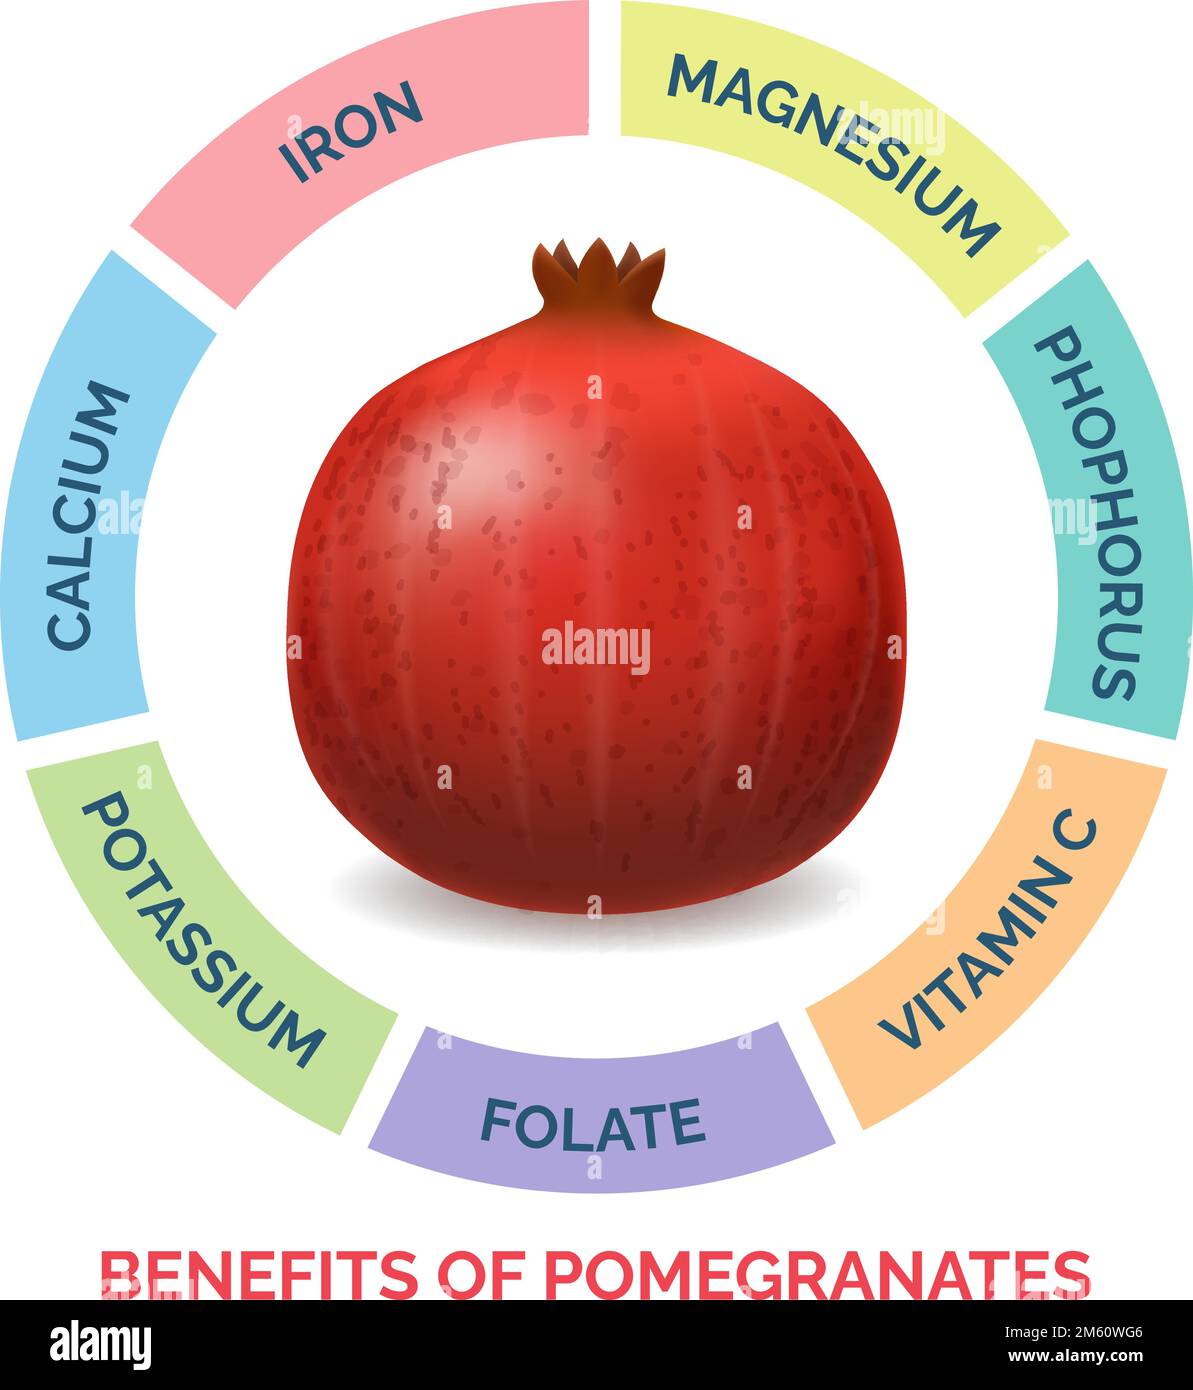 Pomegranates benefits illustration Stock Vector